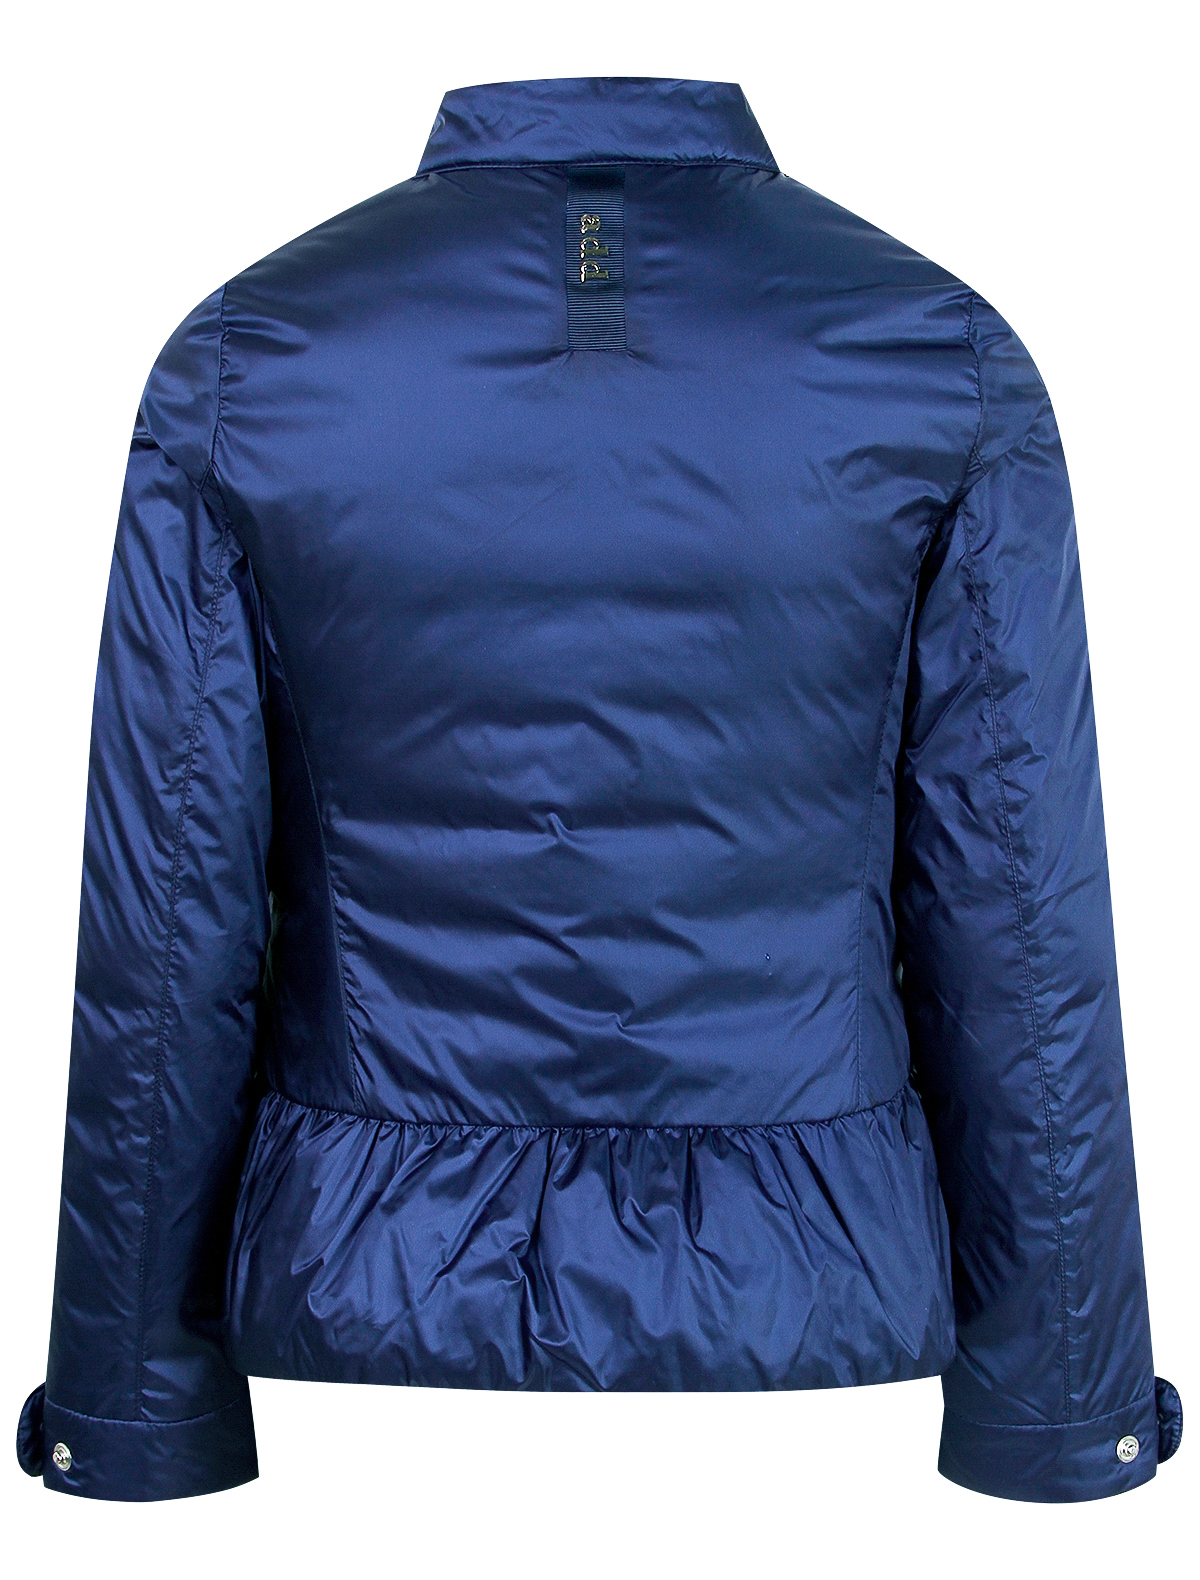 Куртка ADD 1991465, цвет синий, размер 6 1071409970019 - фото 2